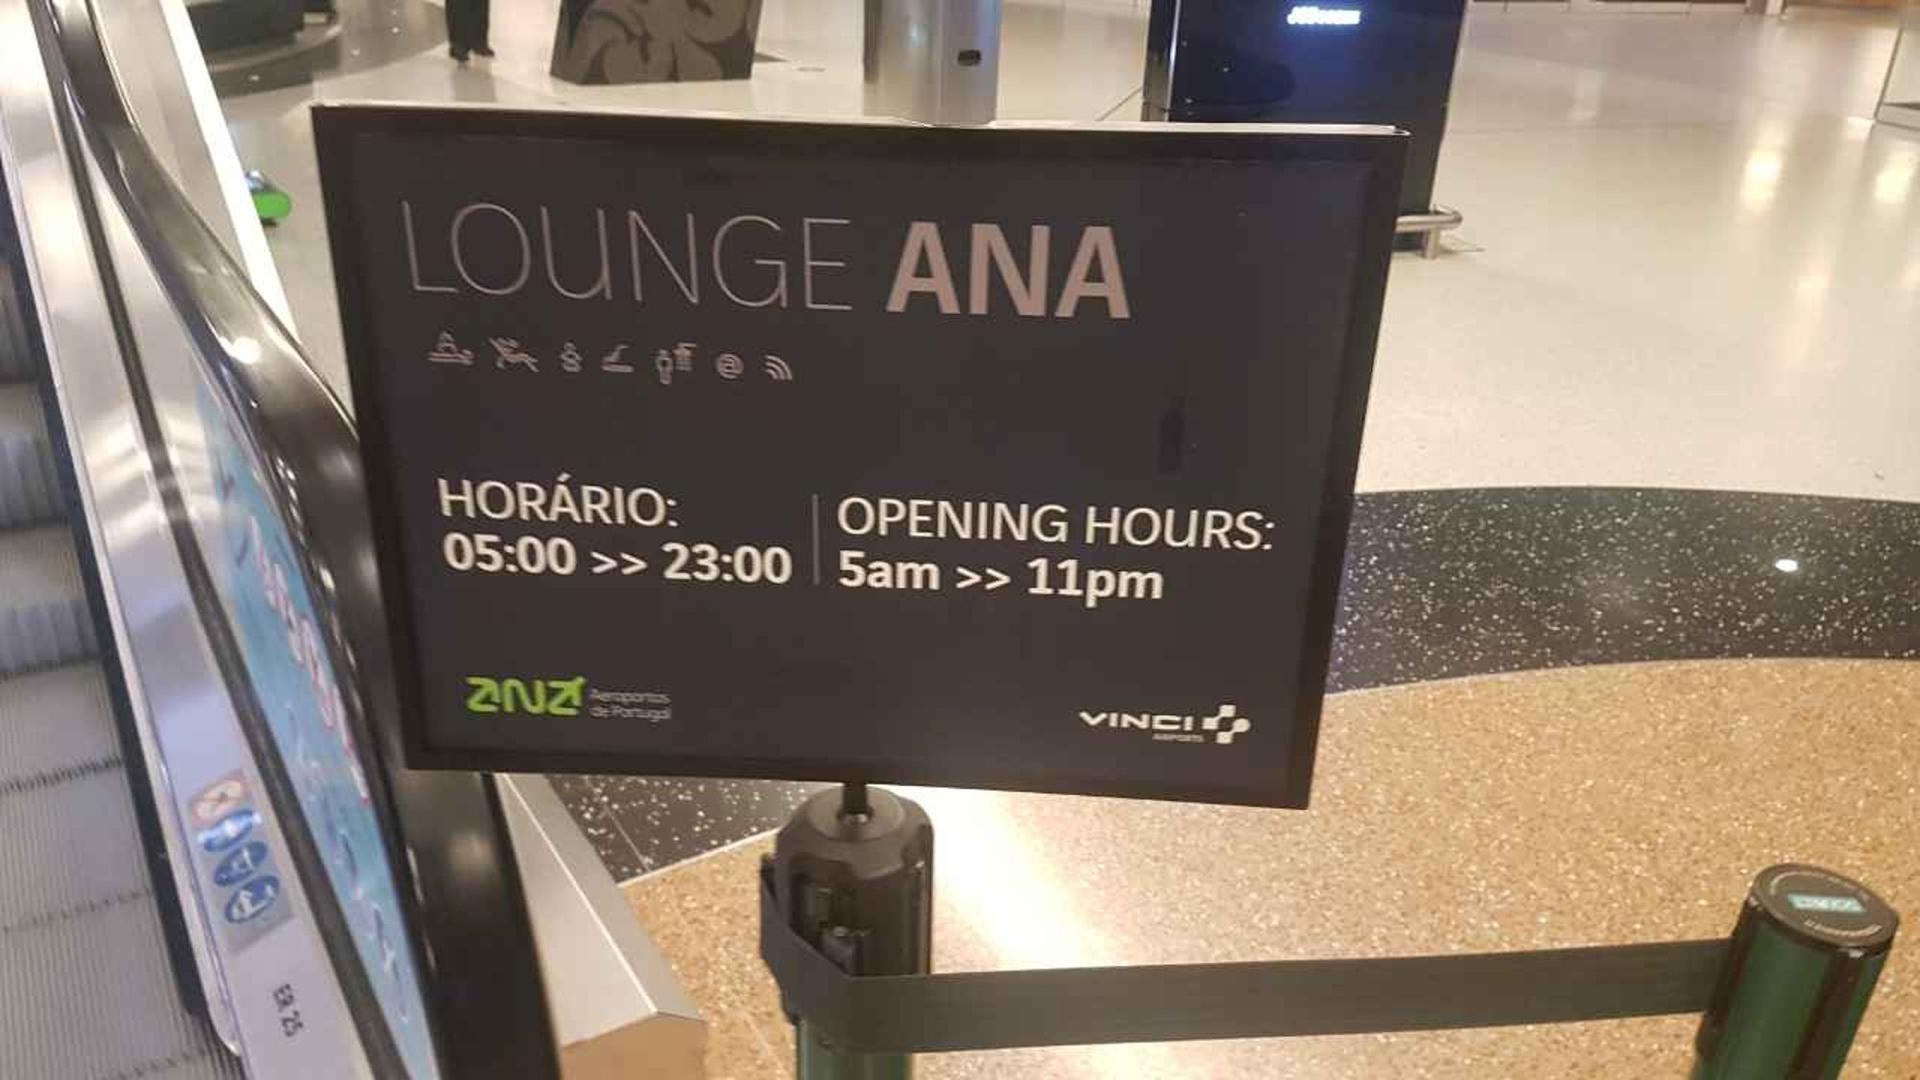 ANA Airport Lounge image 26 of 49